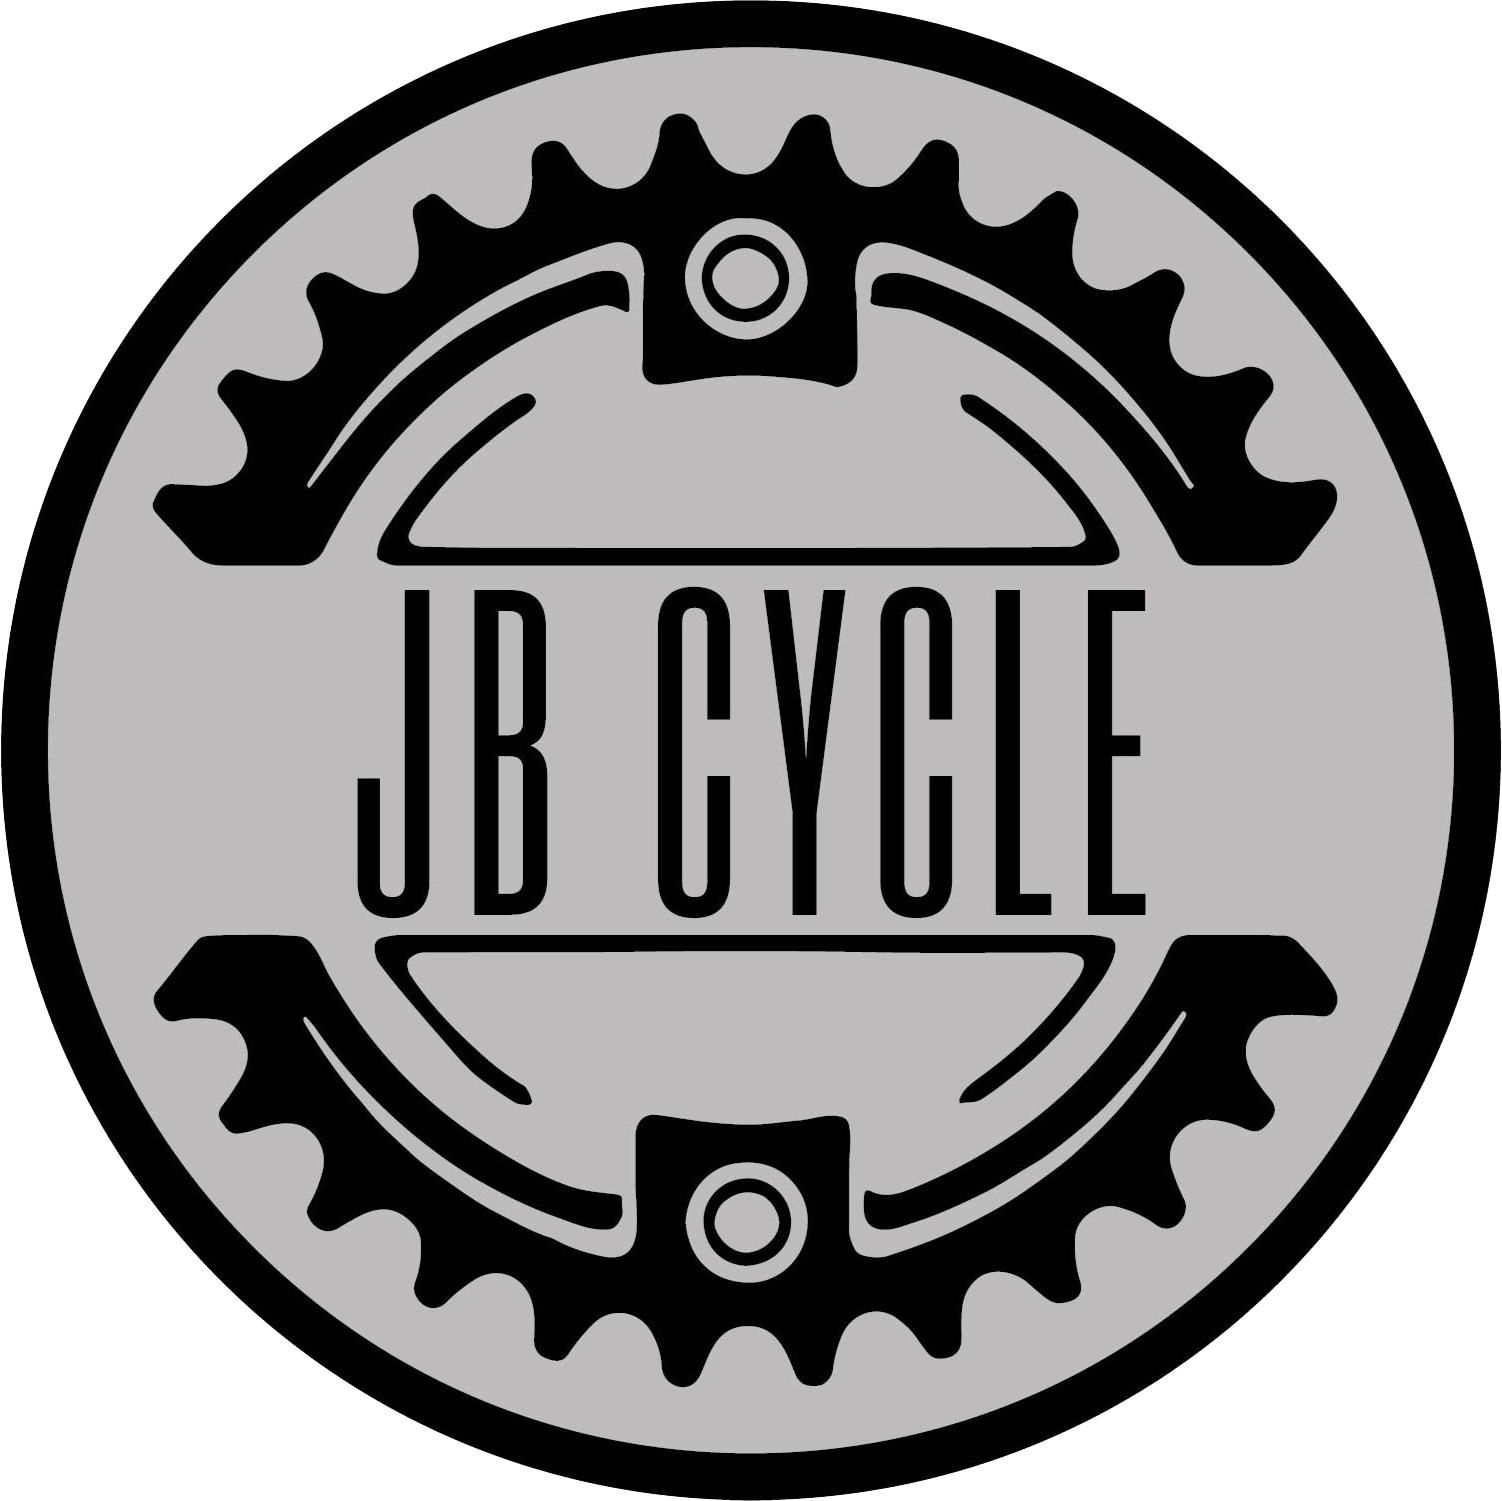 JB Cycle - Logo